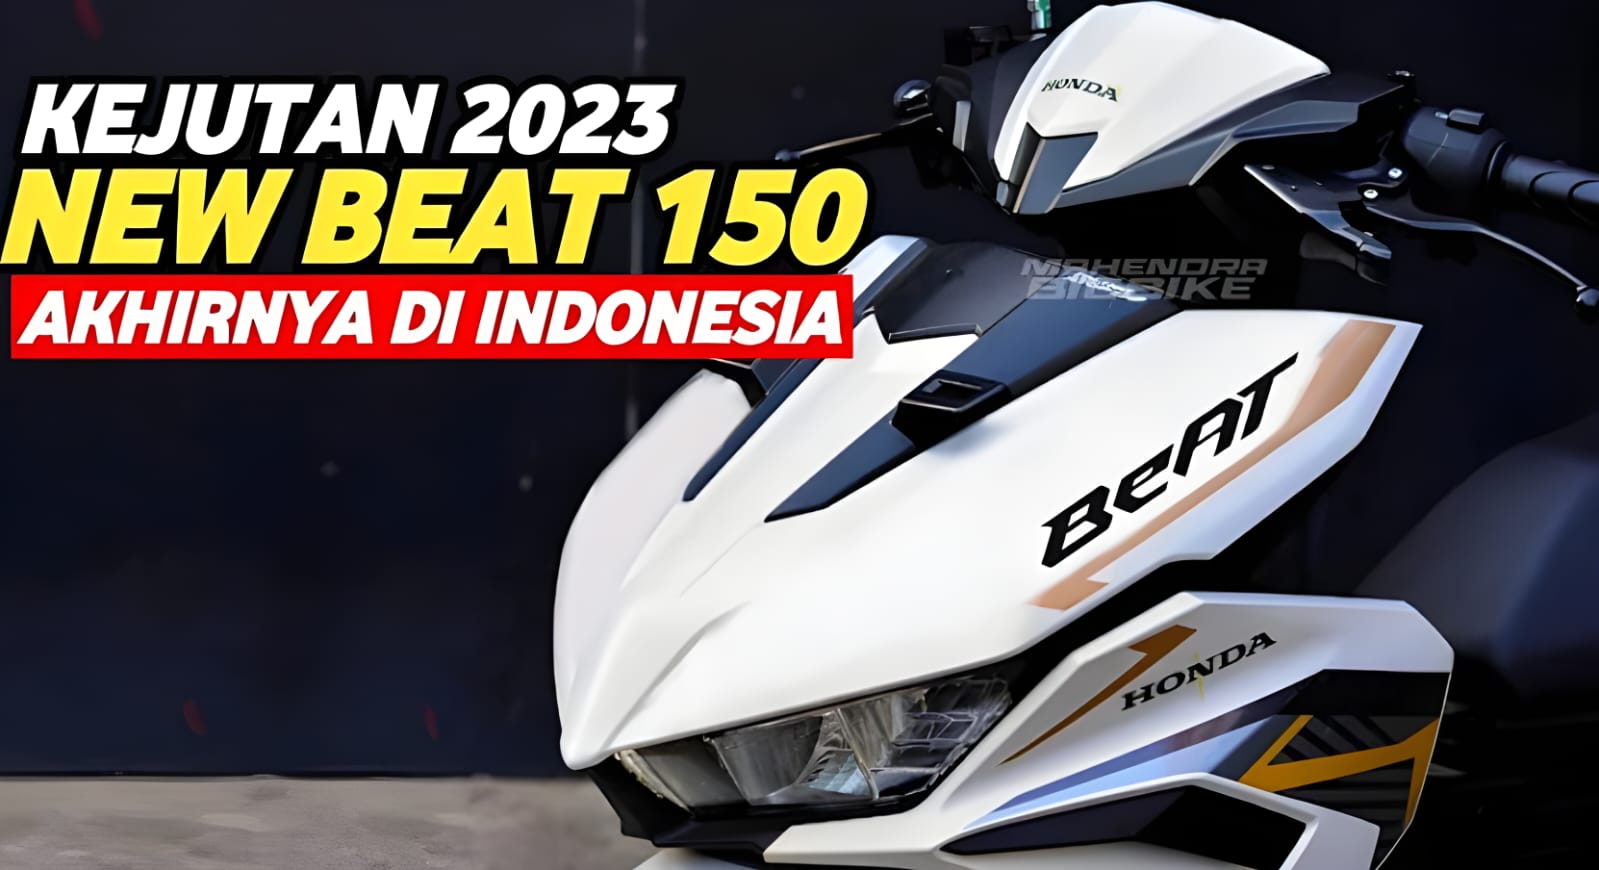 New Honda BeAT 2023 150 cc/Sumber: YouTube (Mahendra BigBike)